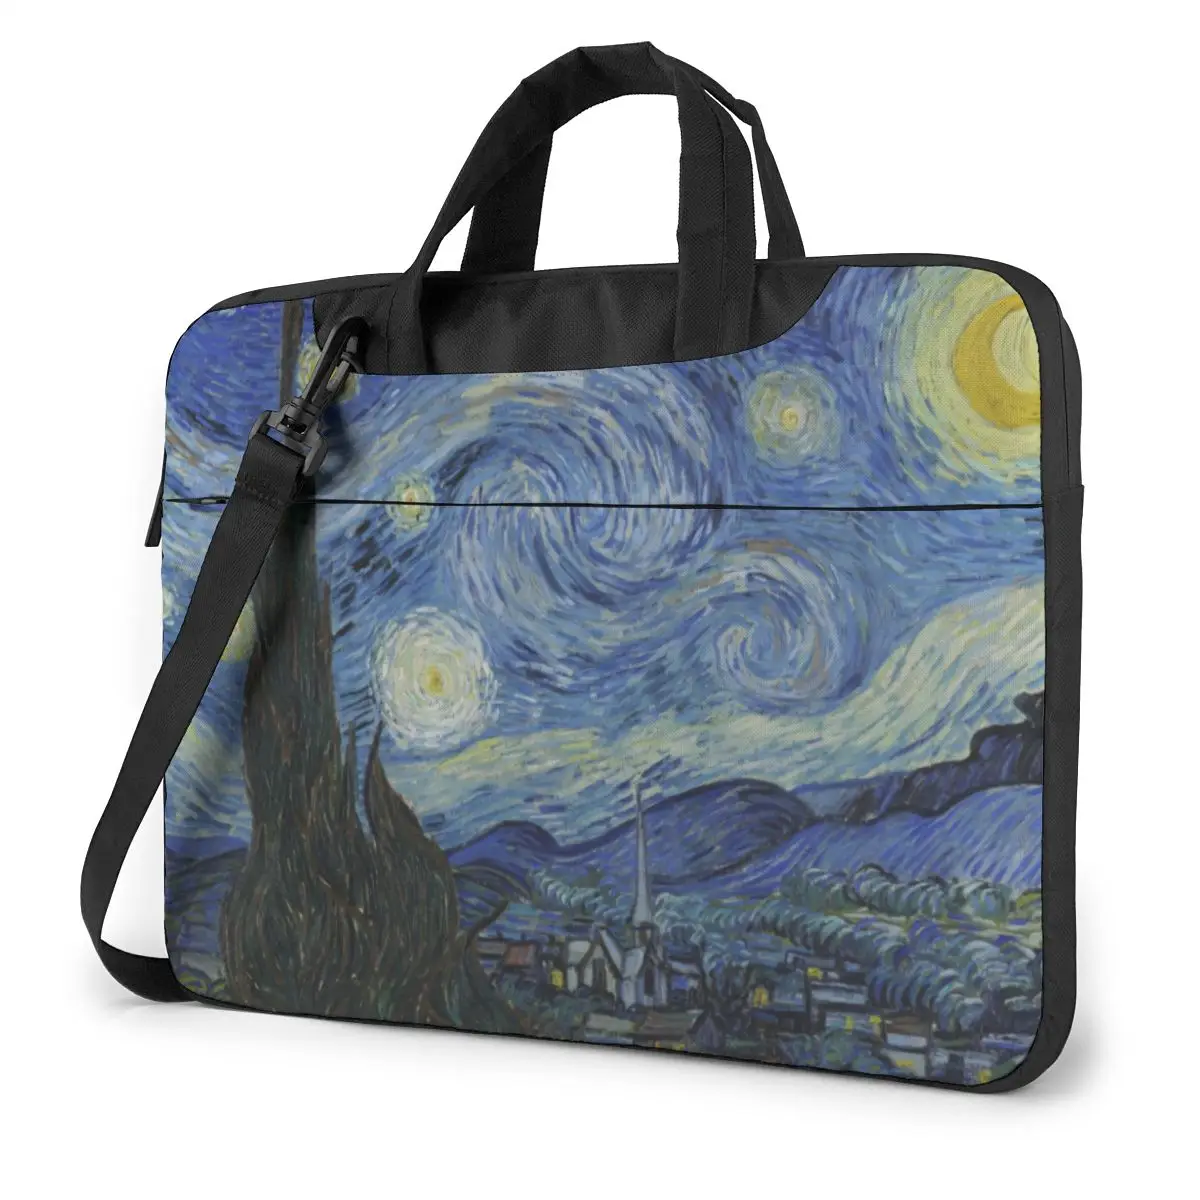 Van Gogh Laptop Bag Case With Handle Protective Computer Bag Stylish Travel Laptop Pouch laptop bags waterproof Laptop Bags & Cases